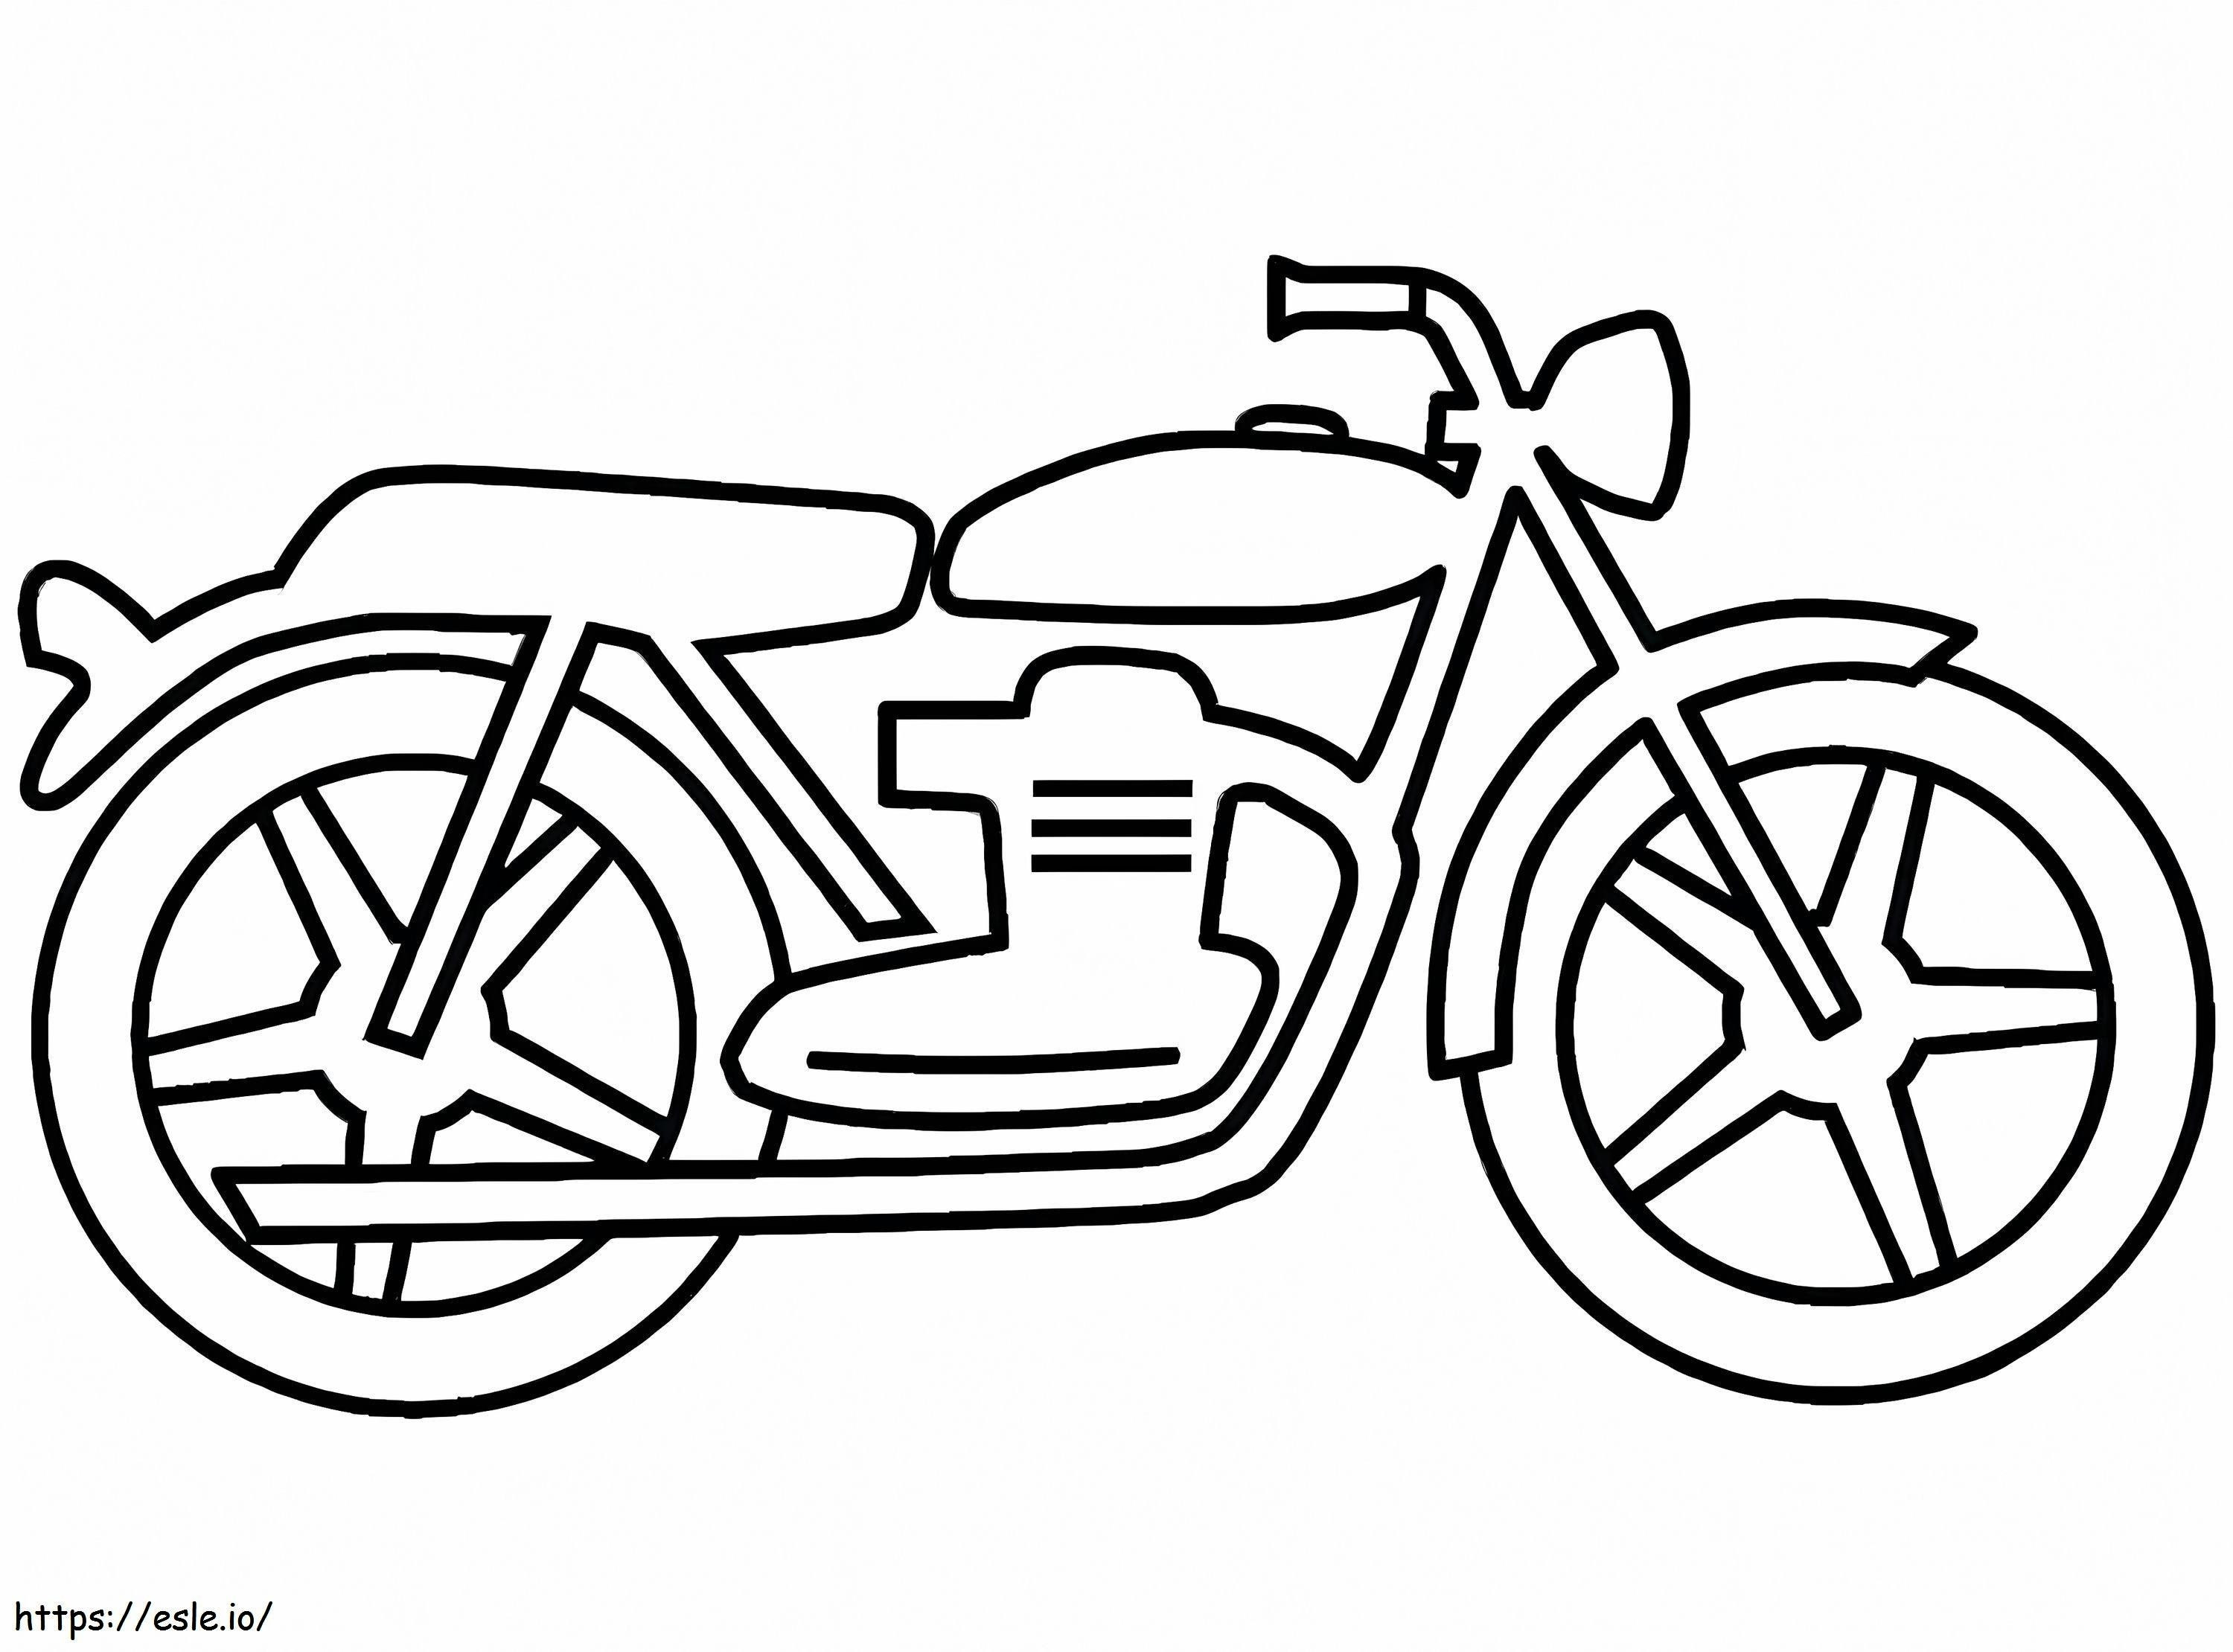 Motocykl 3 kolorowanka